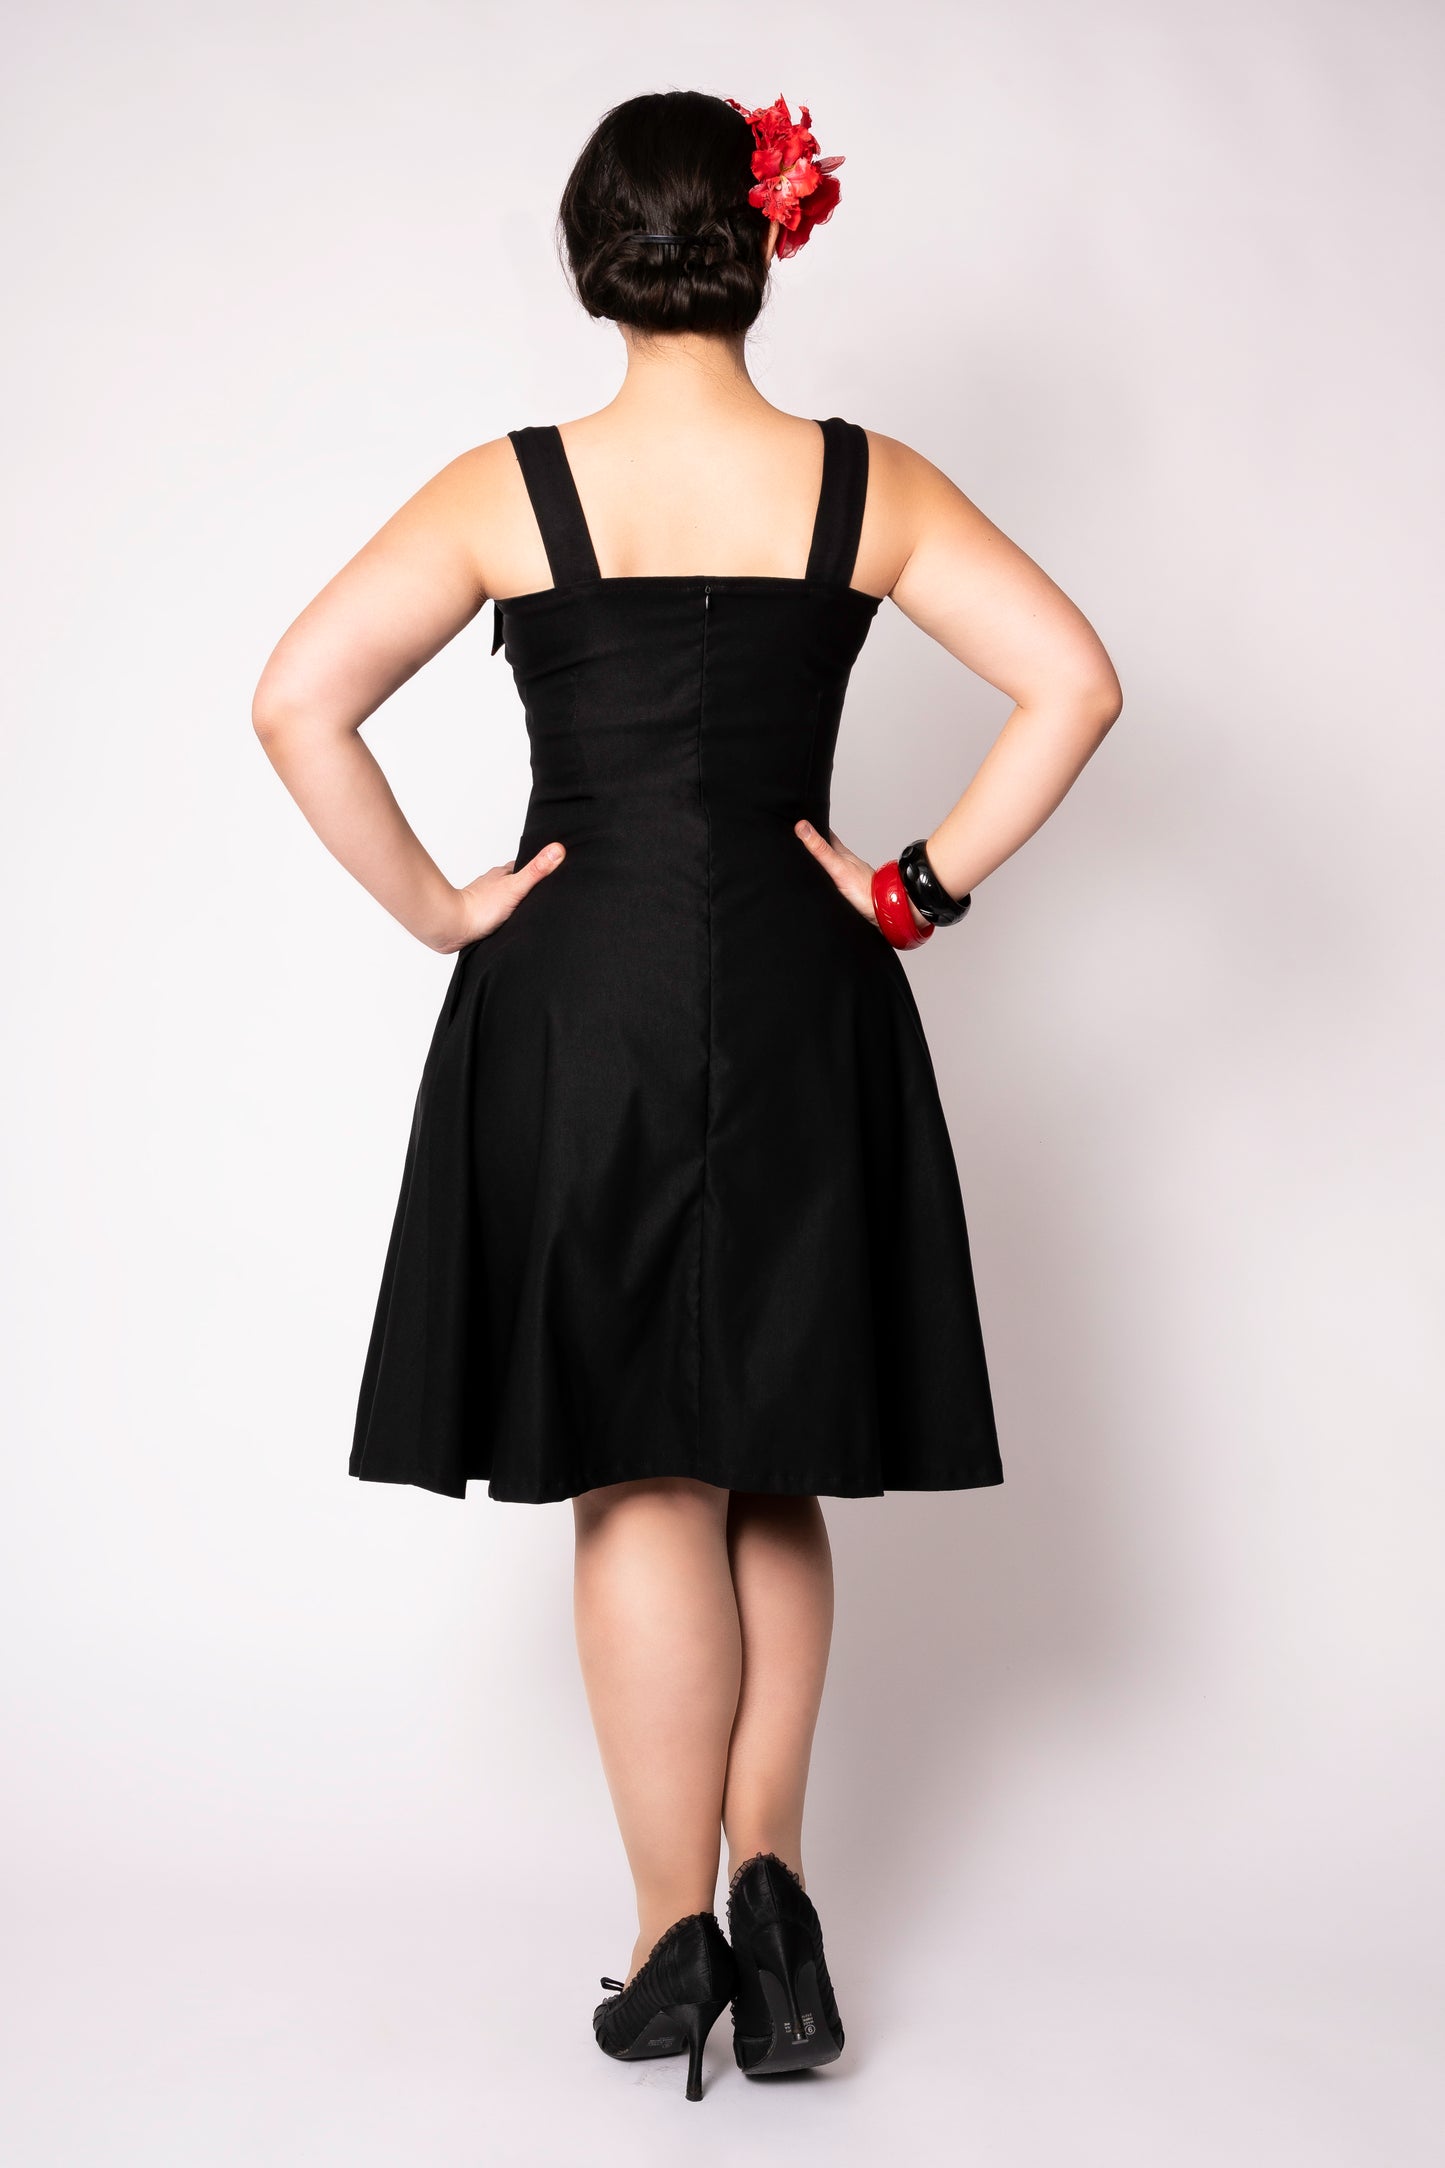 Serenade dress - black/red polka dot